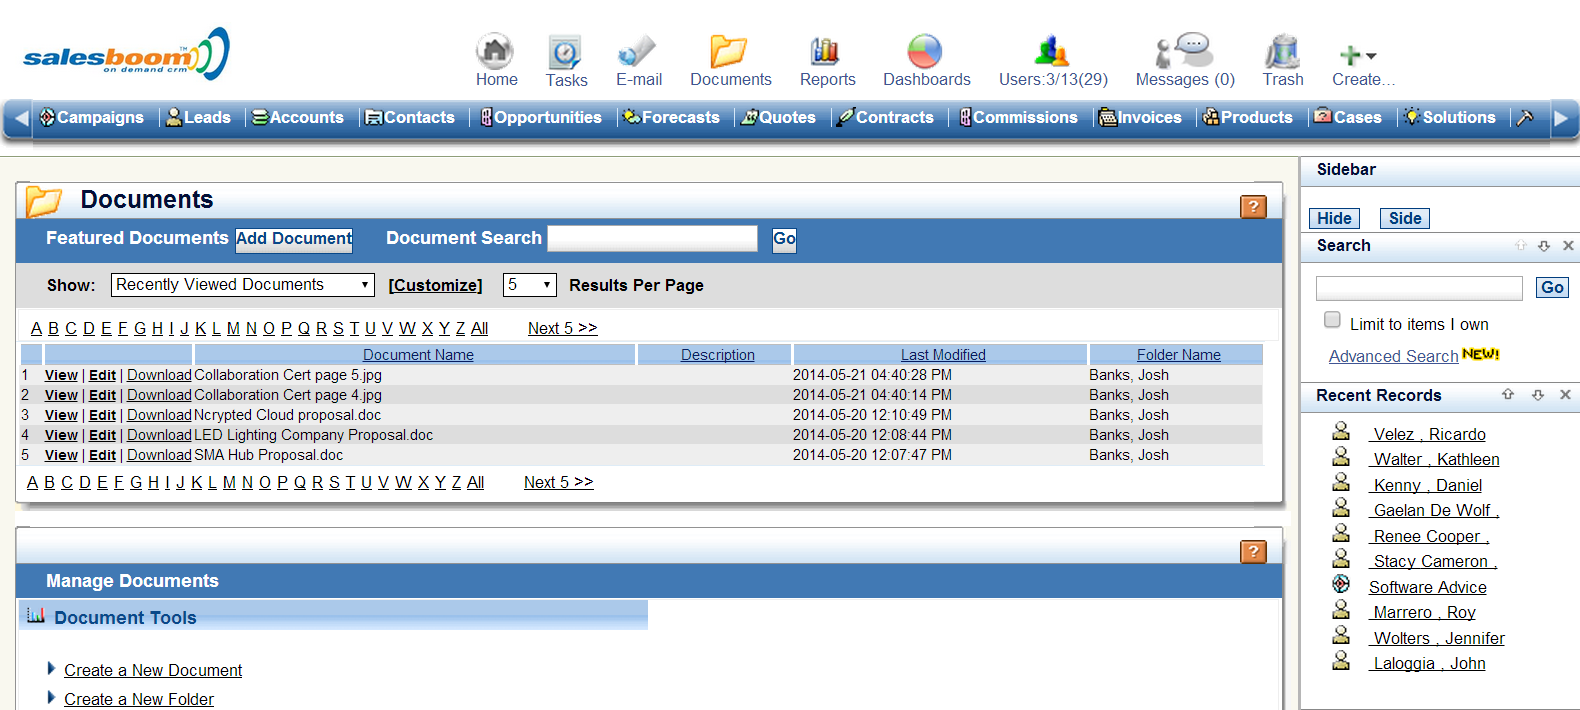 CRM-Document-Management-Software-screenshot | Salesboom Cloud CRM Software